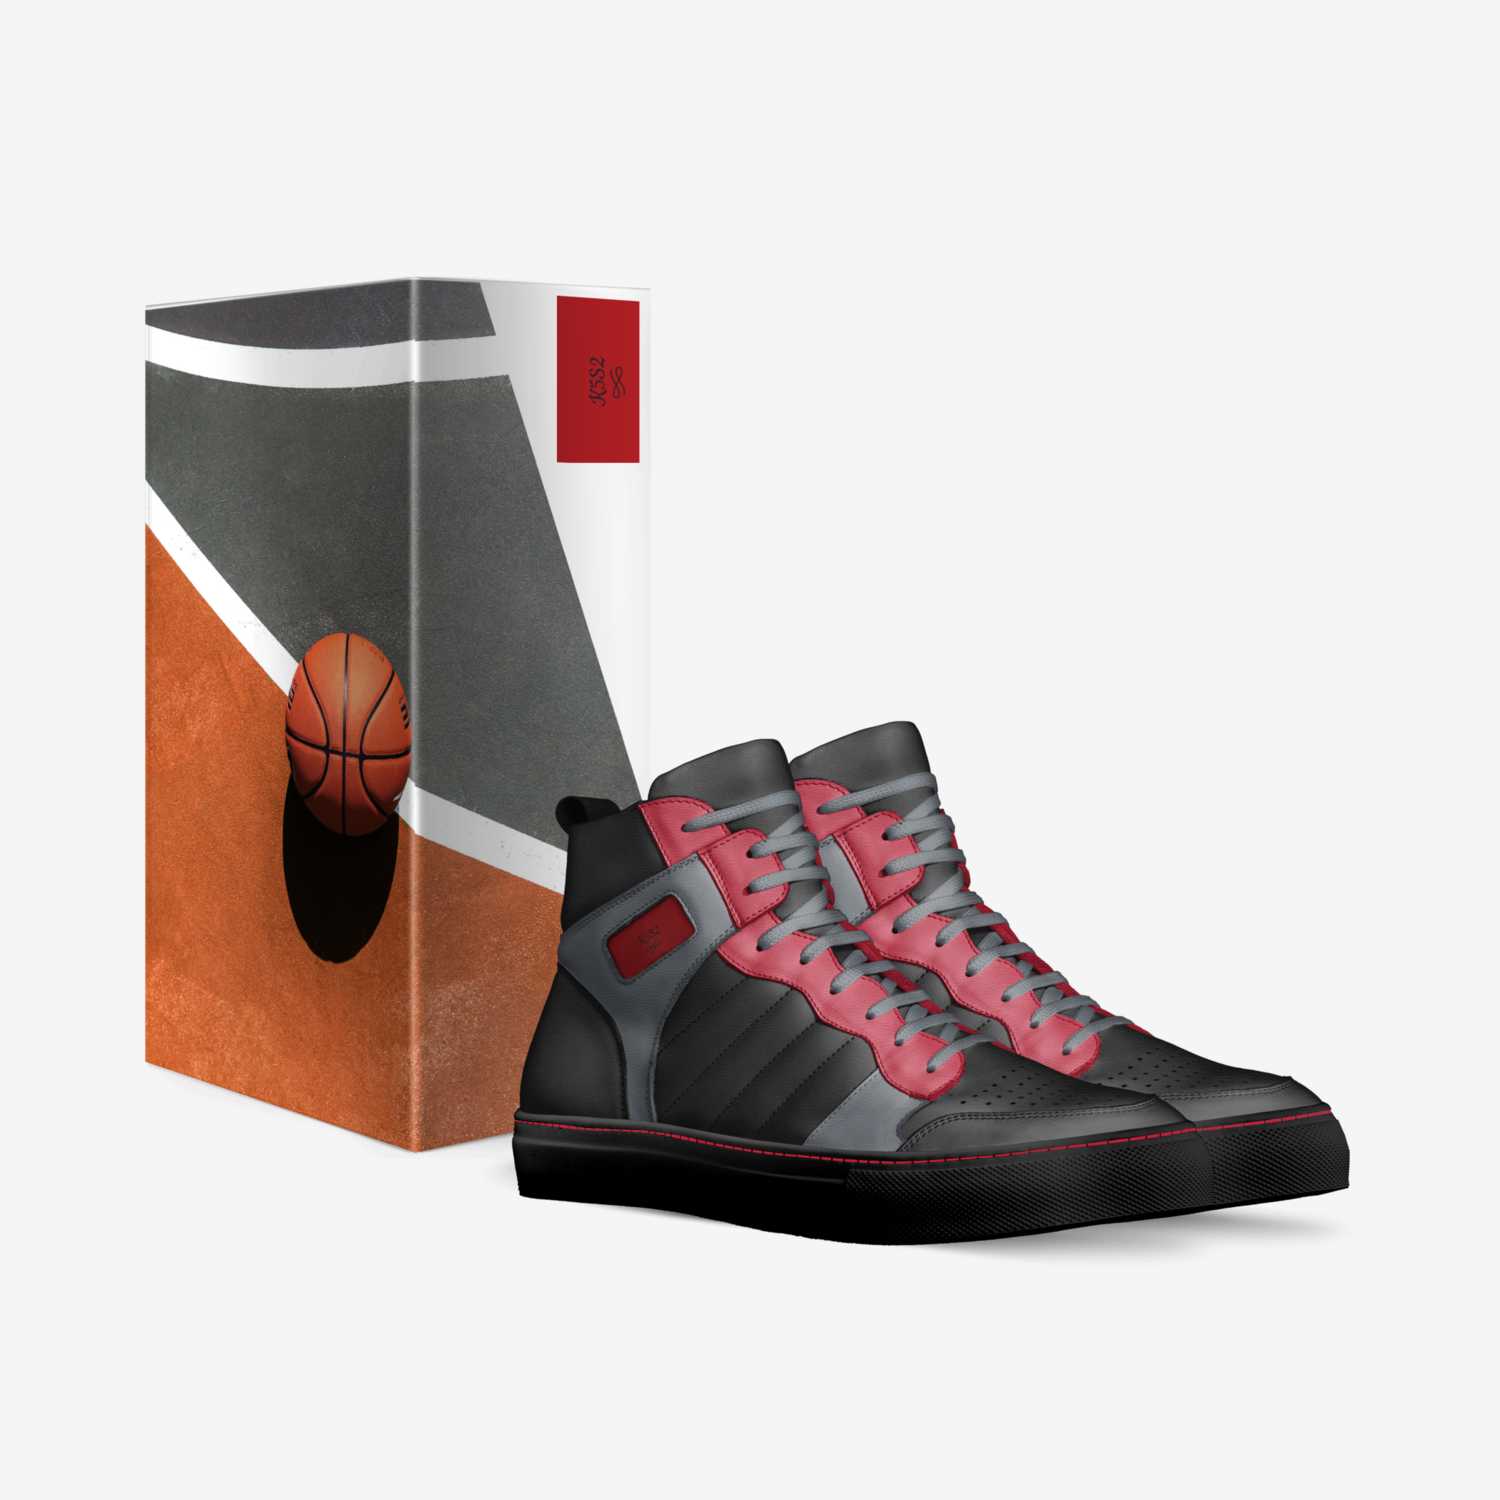 K5S2 custom made in Italy shoes by Mcglothen Nekisha | Box view